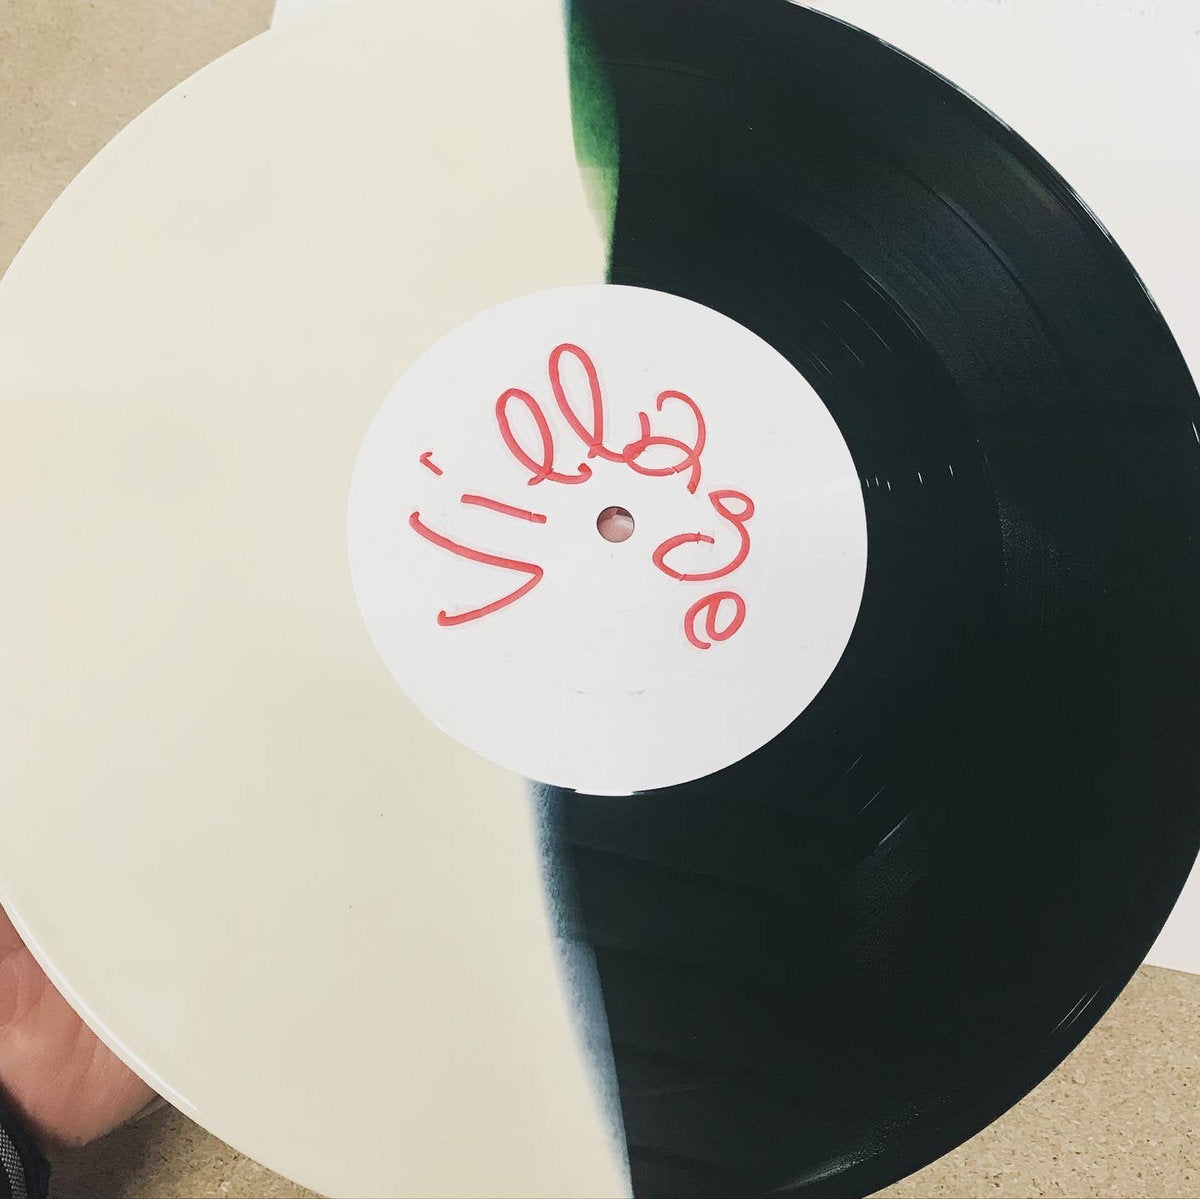 [SOLD OUT] MUSHROOM VILLAGE / MUSHROOM GRANDPA "split" vinyl 10" (lim.100, numbered, color, 180g)